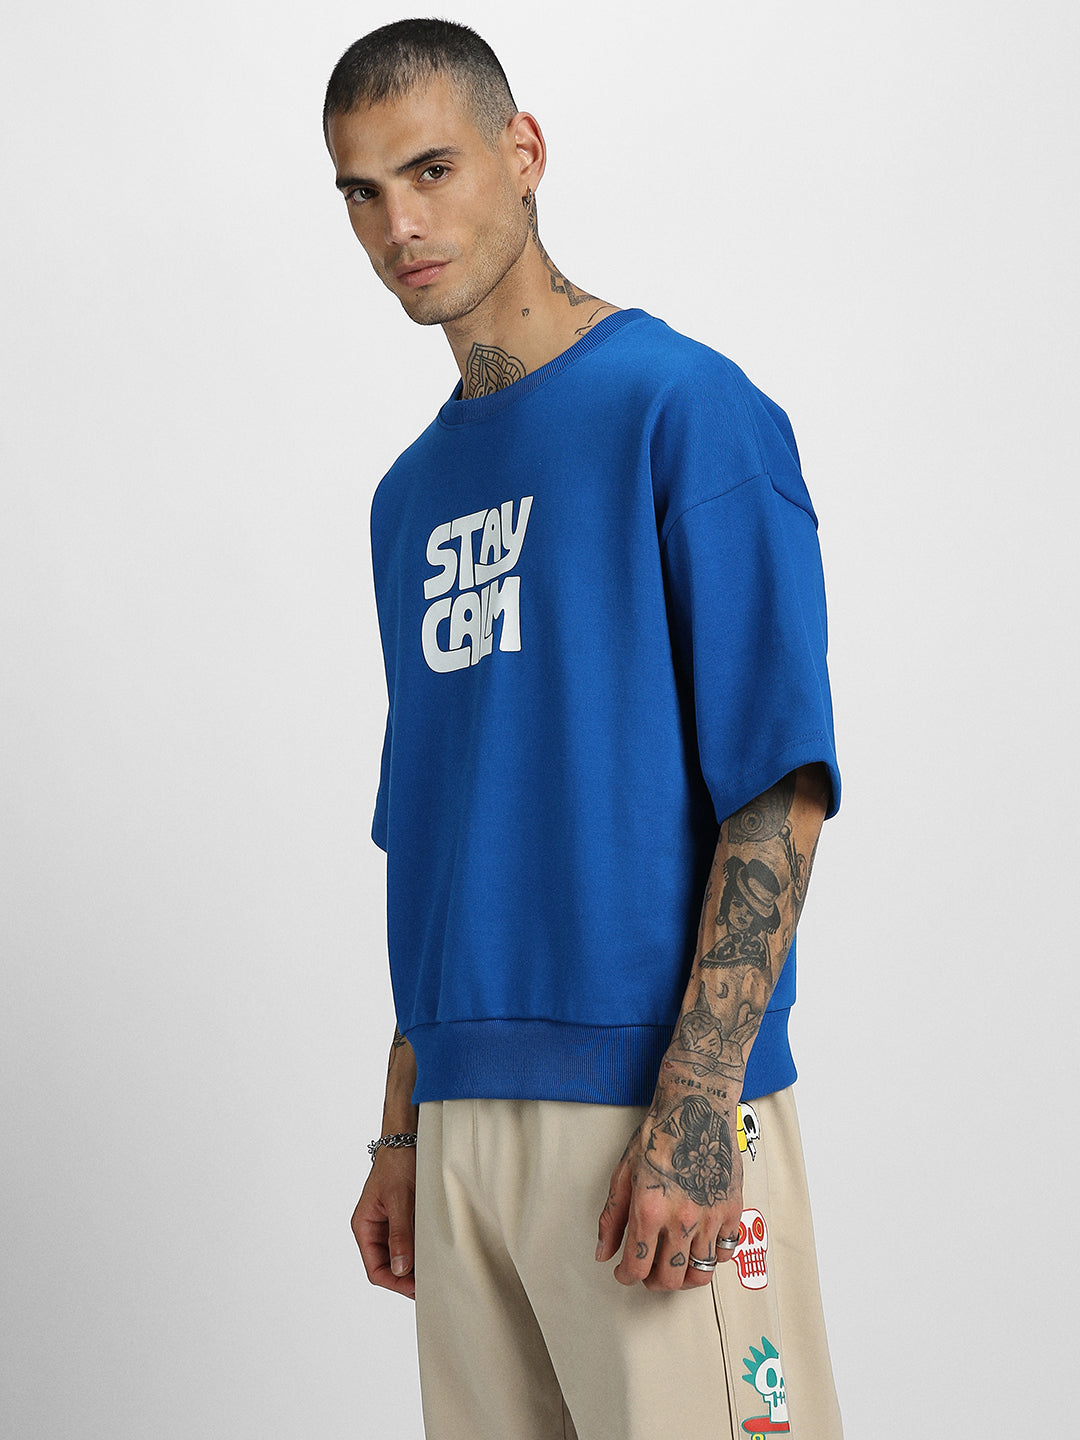 Stay Calm Blue Half Sleeve Printed Sweatshirt Veirdo